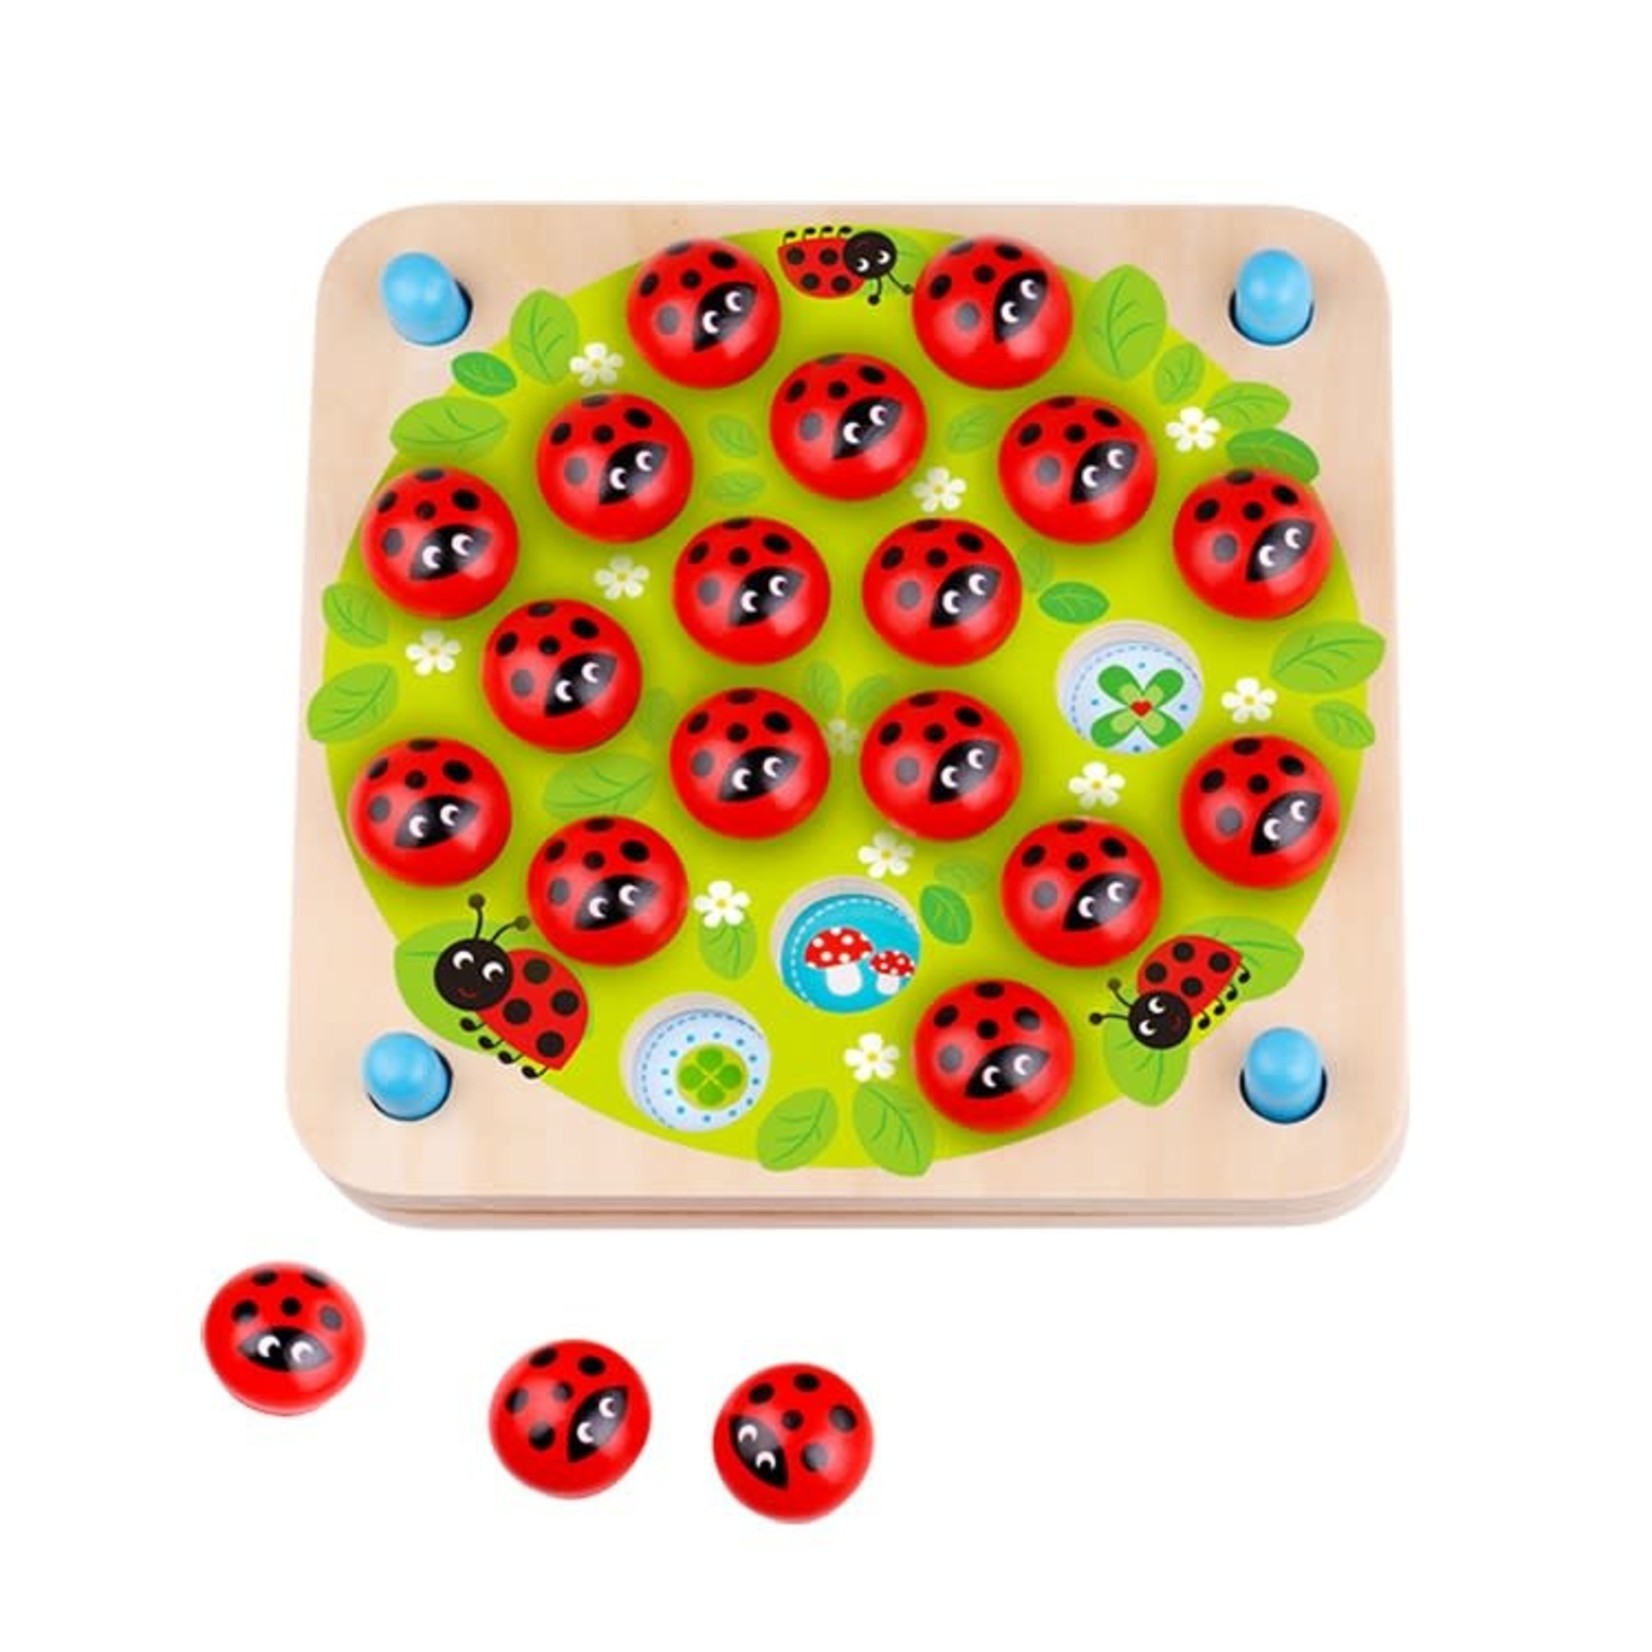 Tooky Toy Memory Game - Ladybug